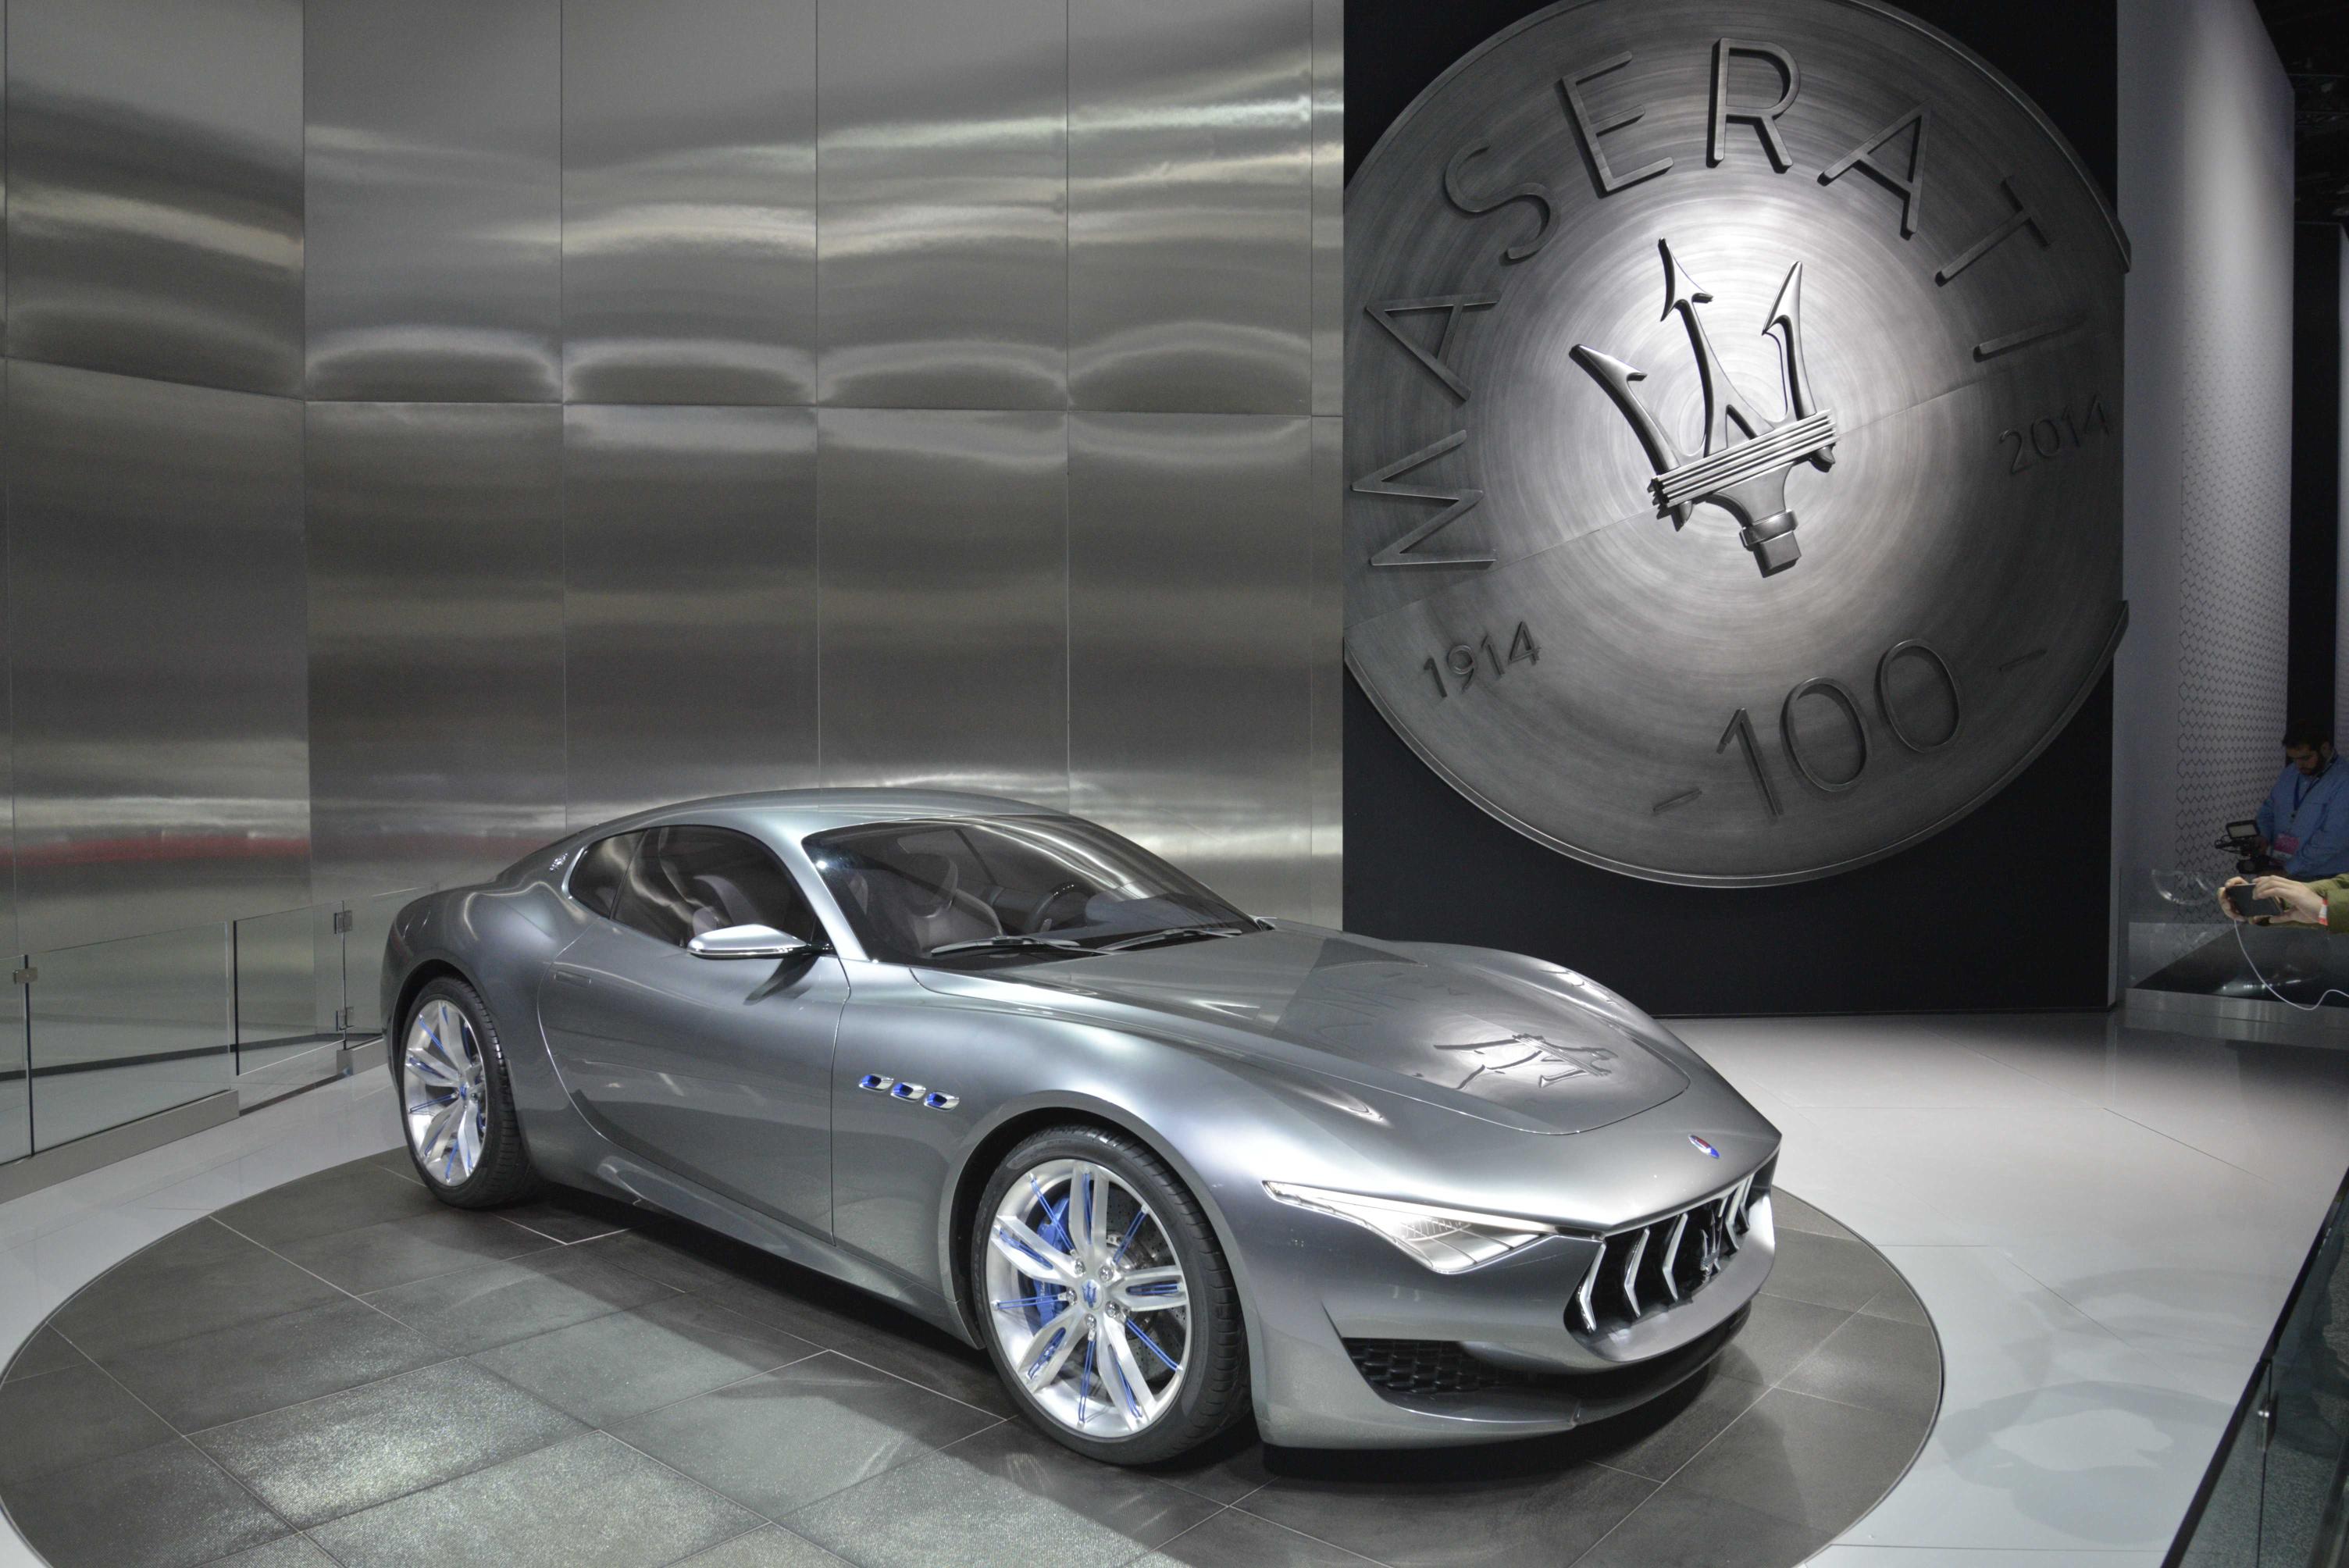 Maserati To Debut Granturismo Replacement In 2017 Alfieri In 2018 Images, Photos, Reviews